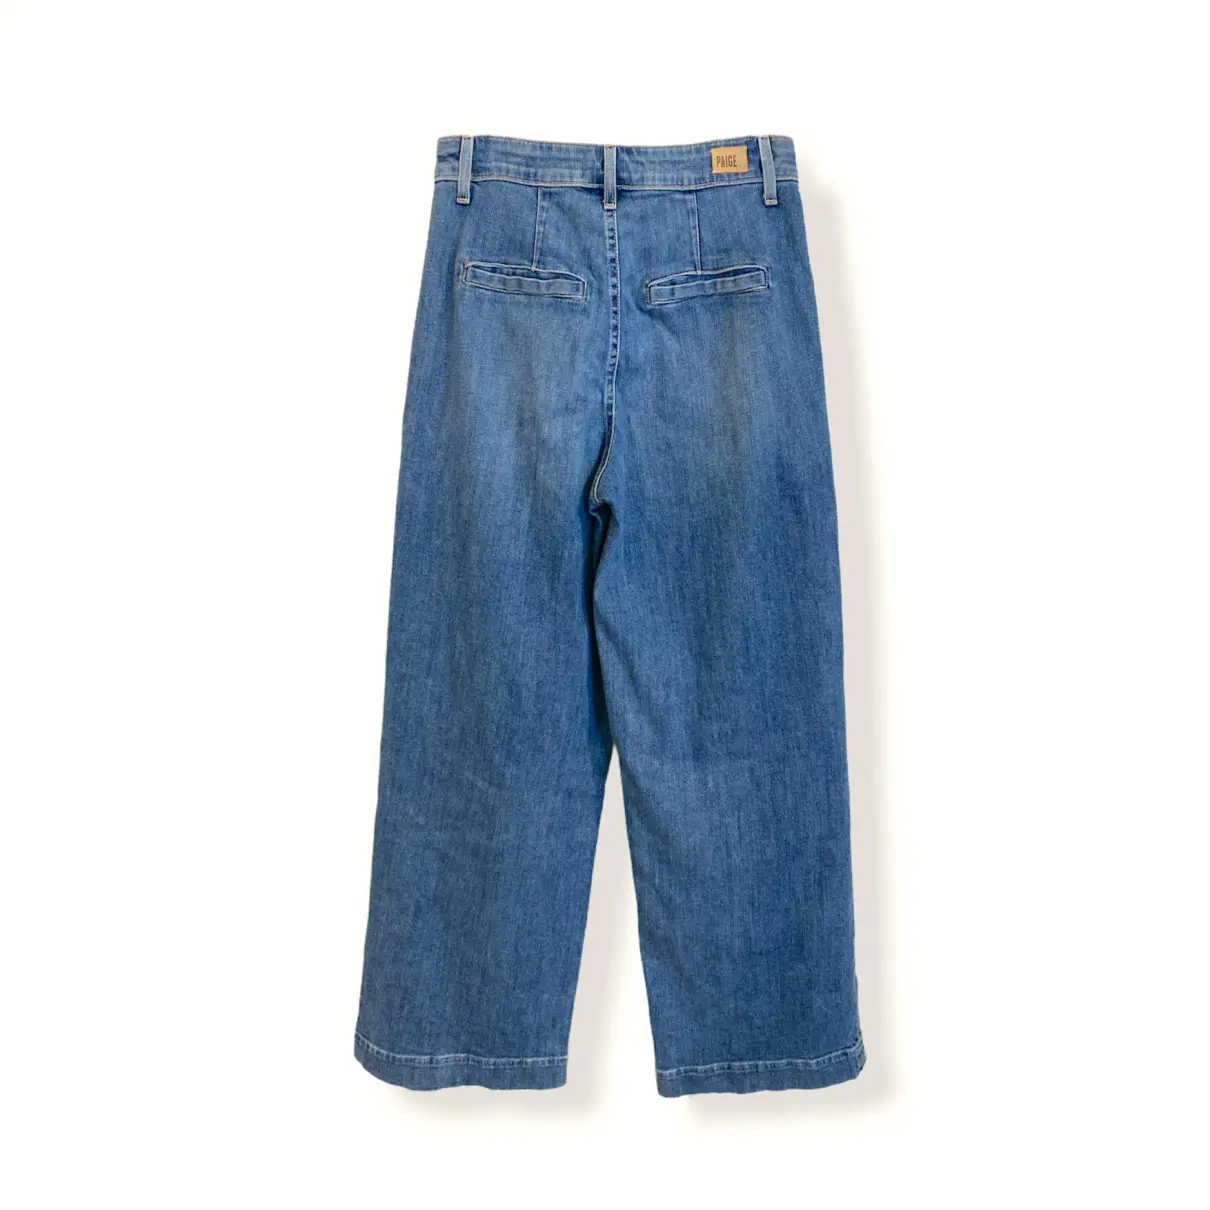 Buy Paige Jeans Blue Cotton - elasthane Jeans online